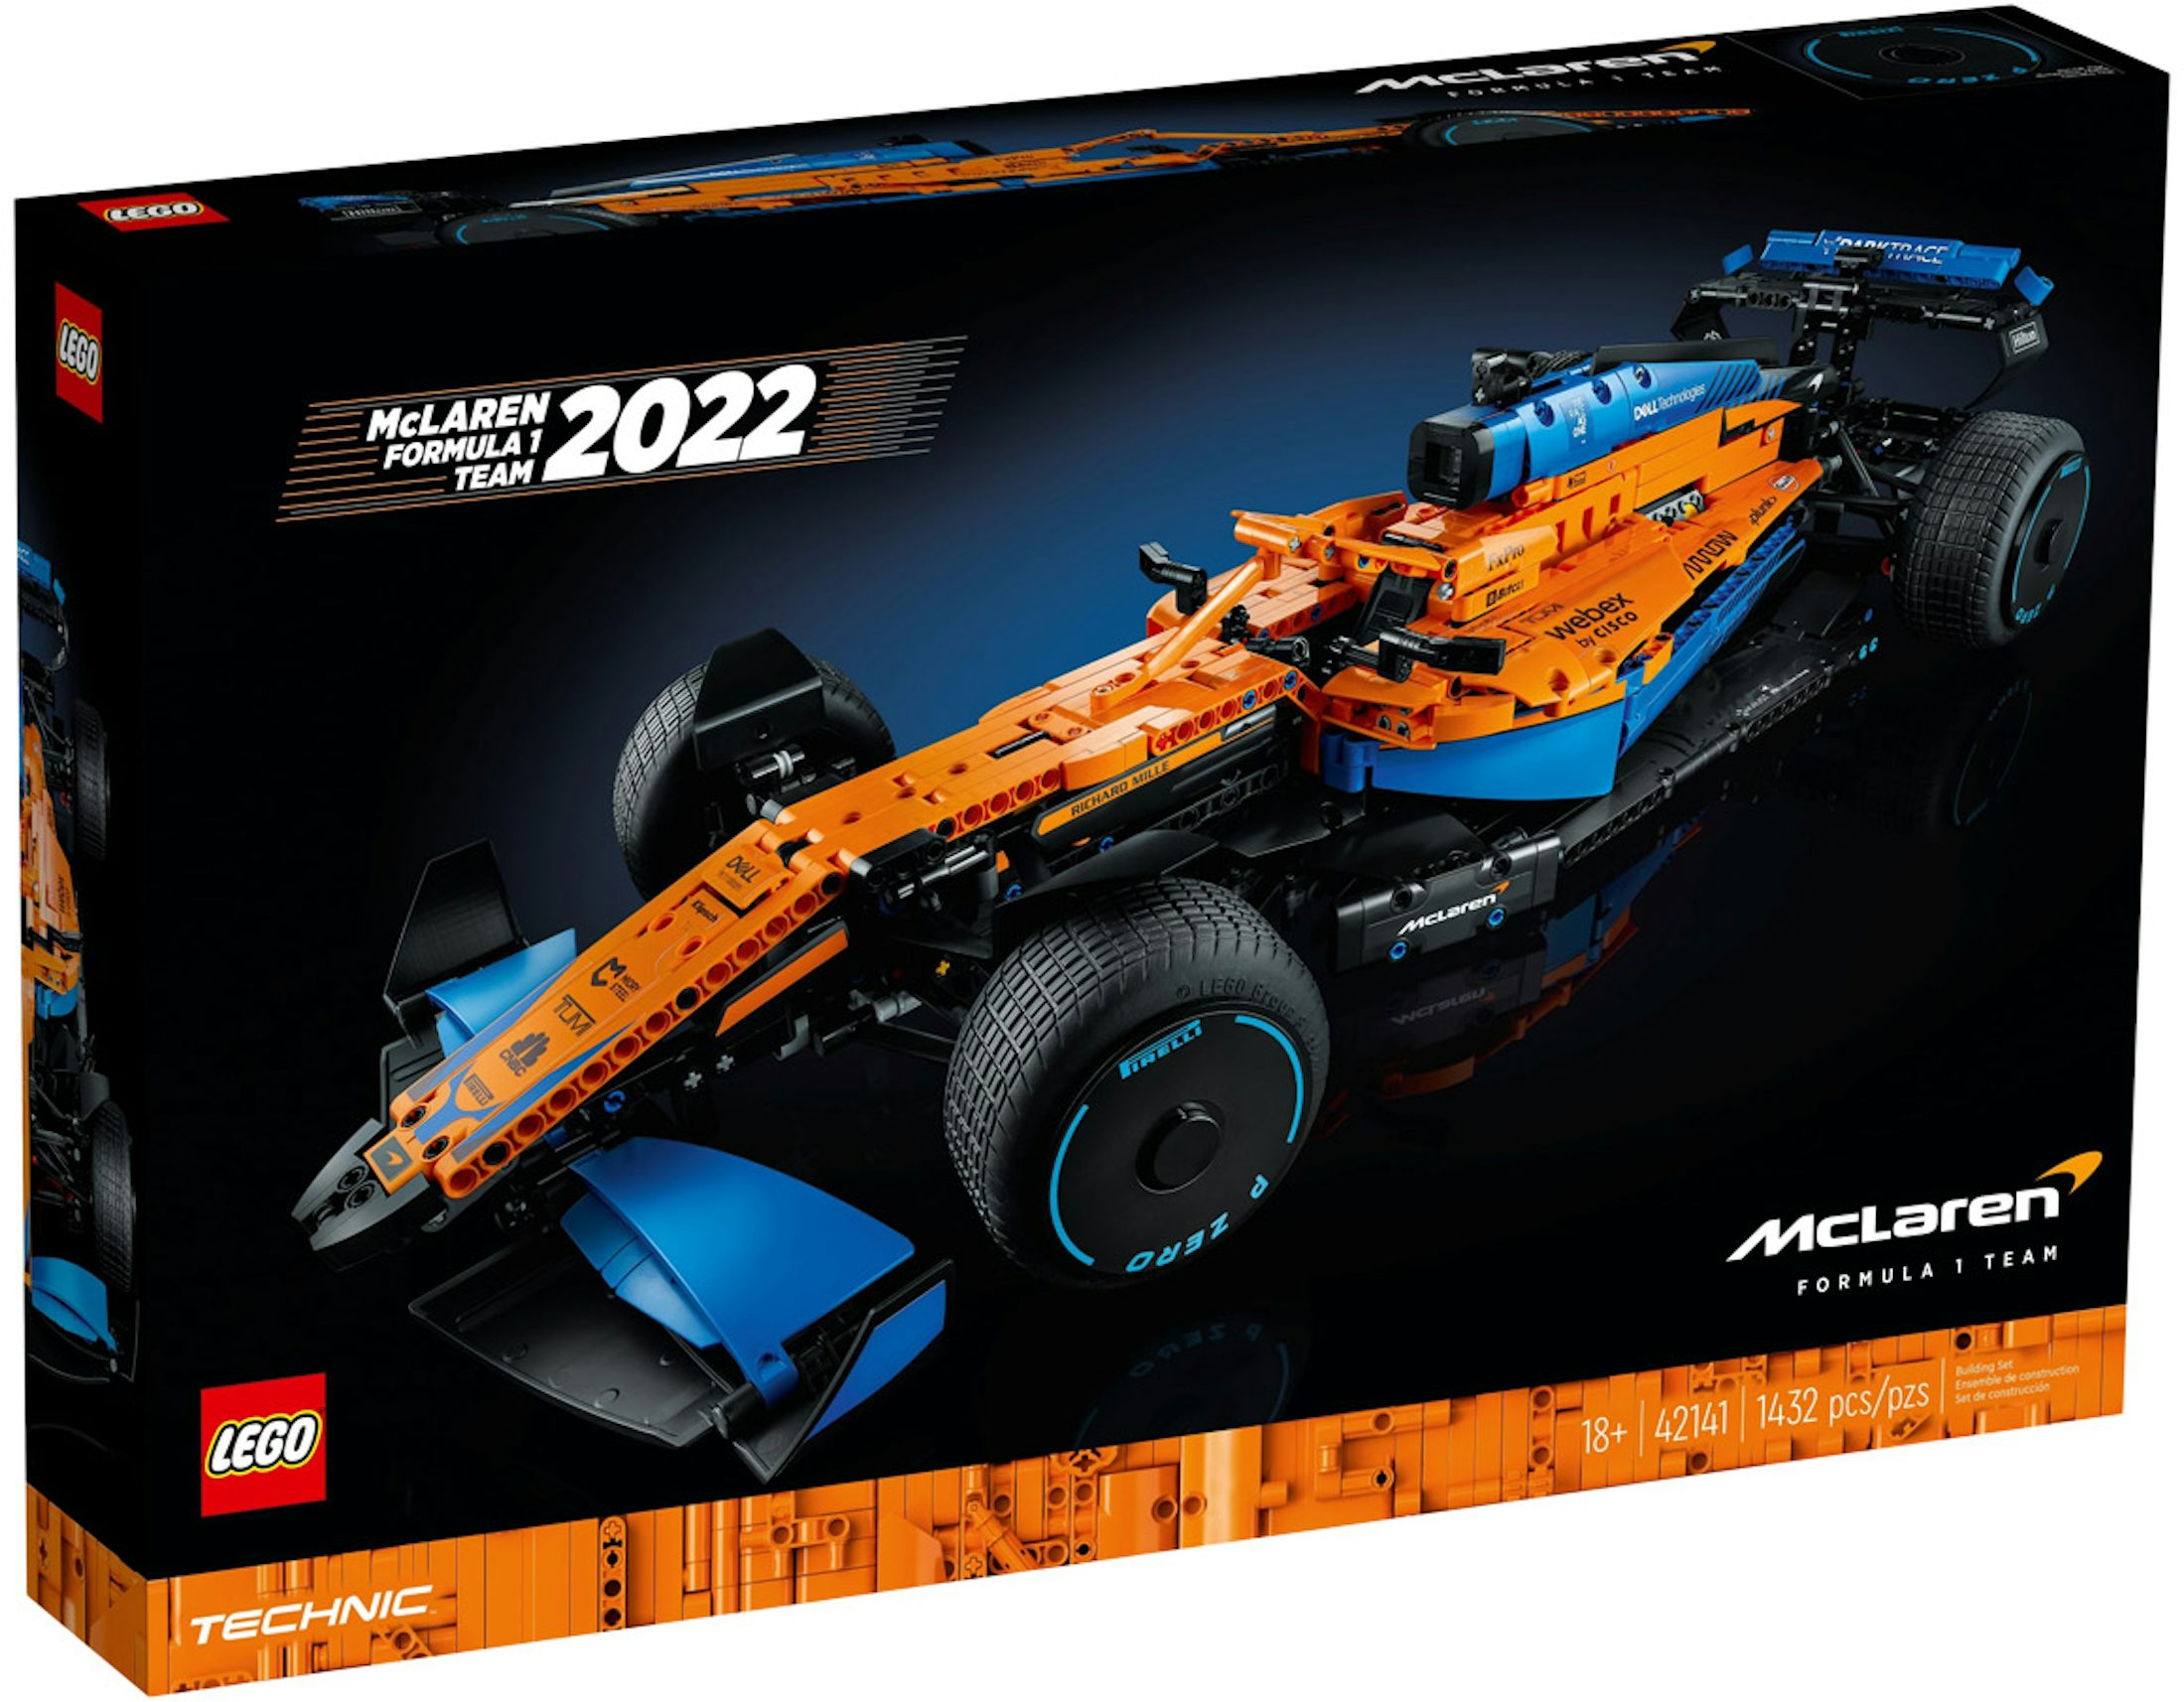 https://images.stockx.com/images/LEGO-Technic-Mclaren-Formula-1-Team-Race-Car-Set-42141.jpg?fit=fill&bg=FFFFFF&w=1200&h=857&fm=jpg&auto=compress&dpr=2&trim=color&updated_at=1644594695&q=60